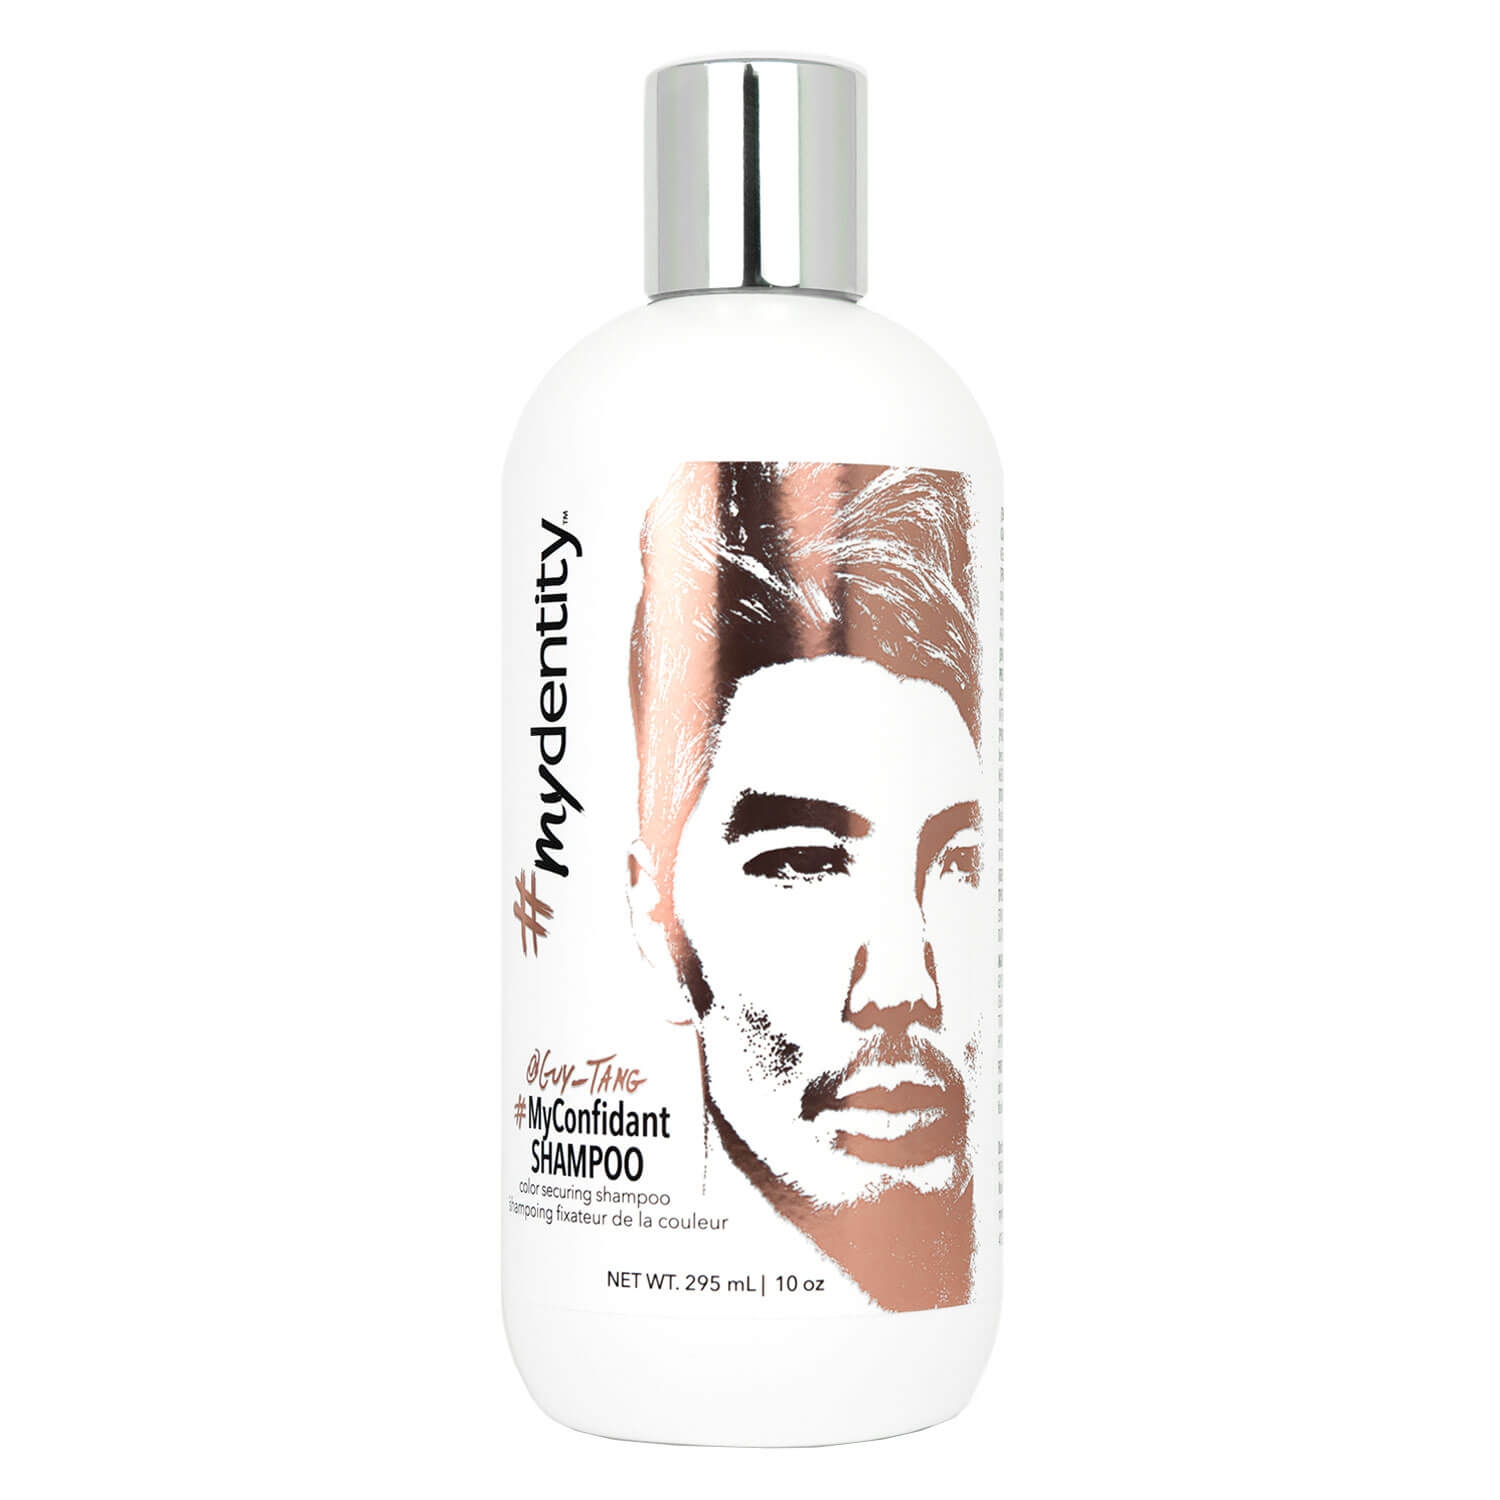 Image du produit de mydentity Care - #MyConfidant Shampoo